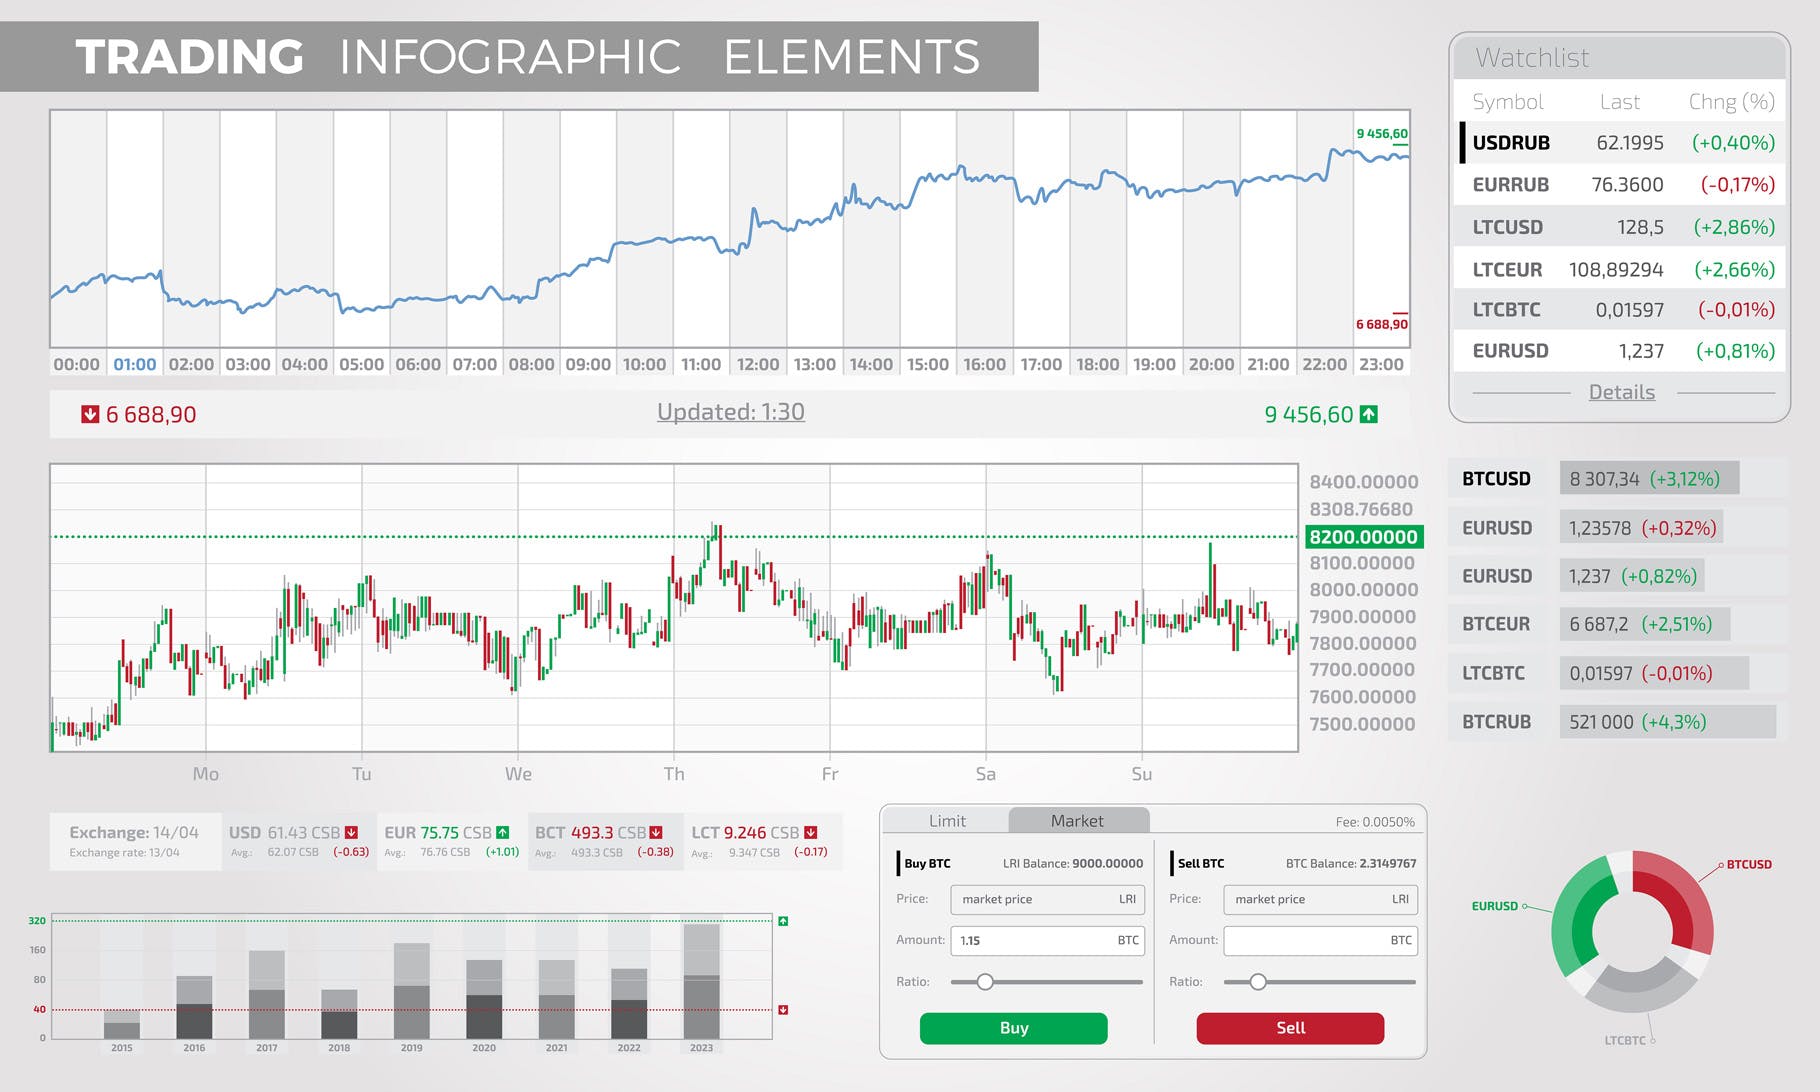 股票交易行情可视化数据图表设计模板 Trading Infographic Elements插图2